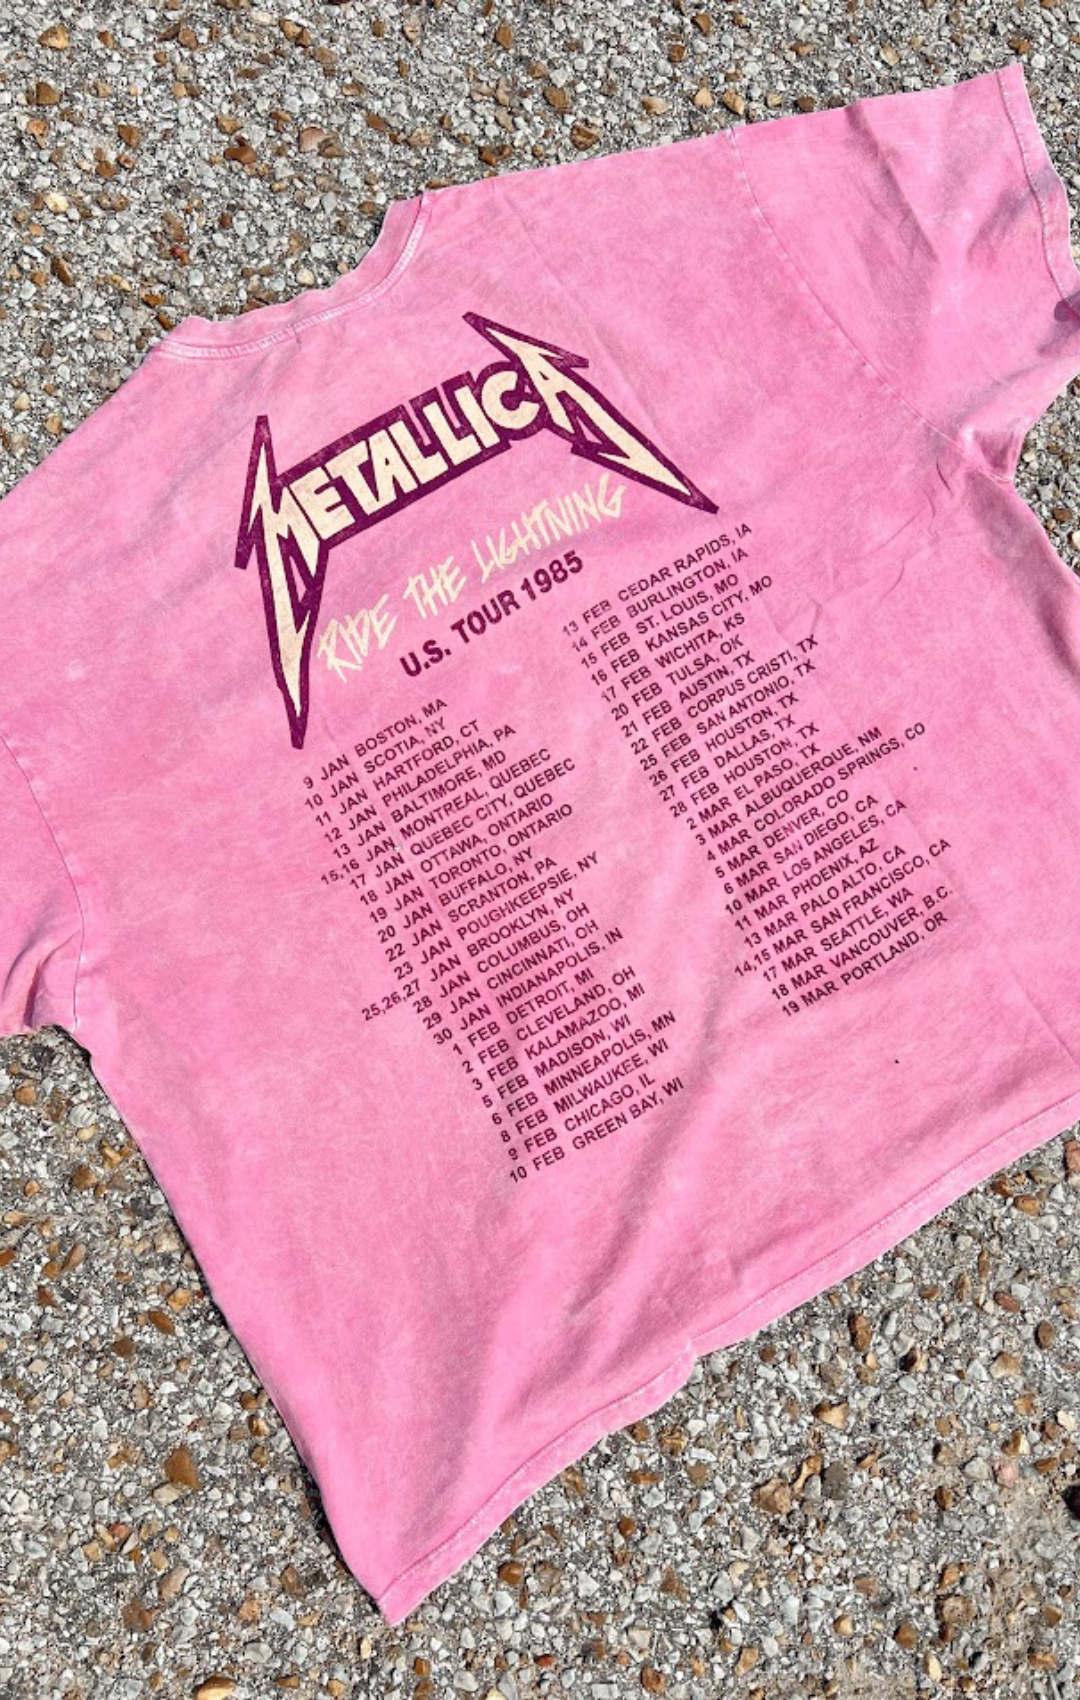 Metallica US Tour 1985 Daydreamer Tee